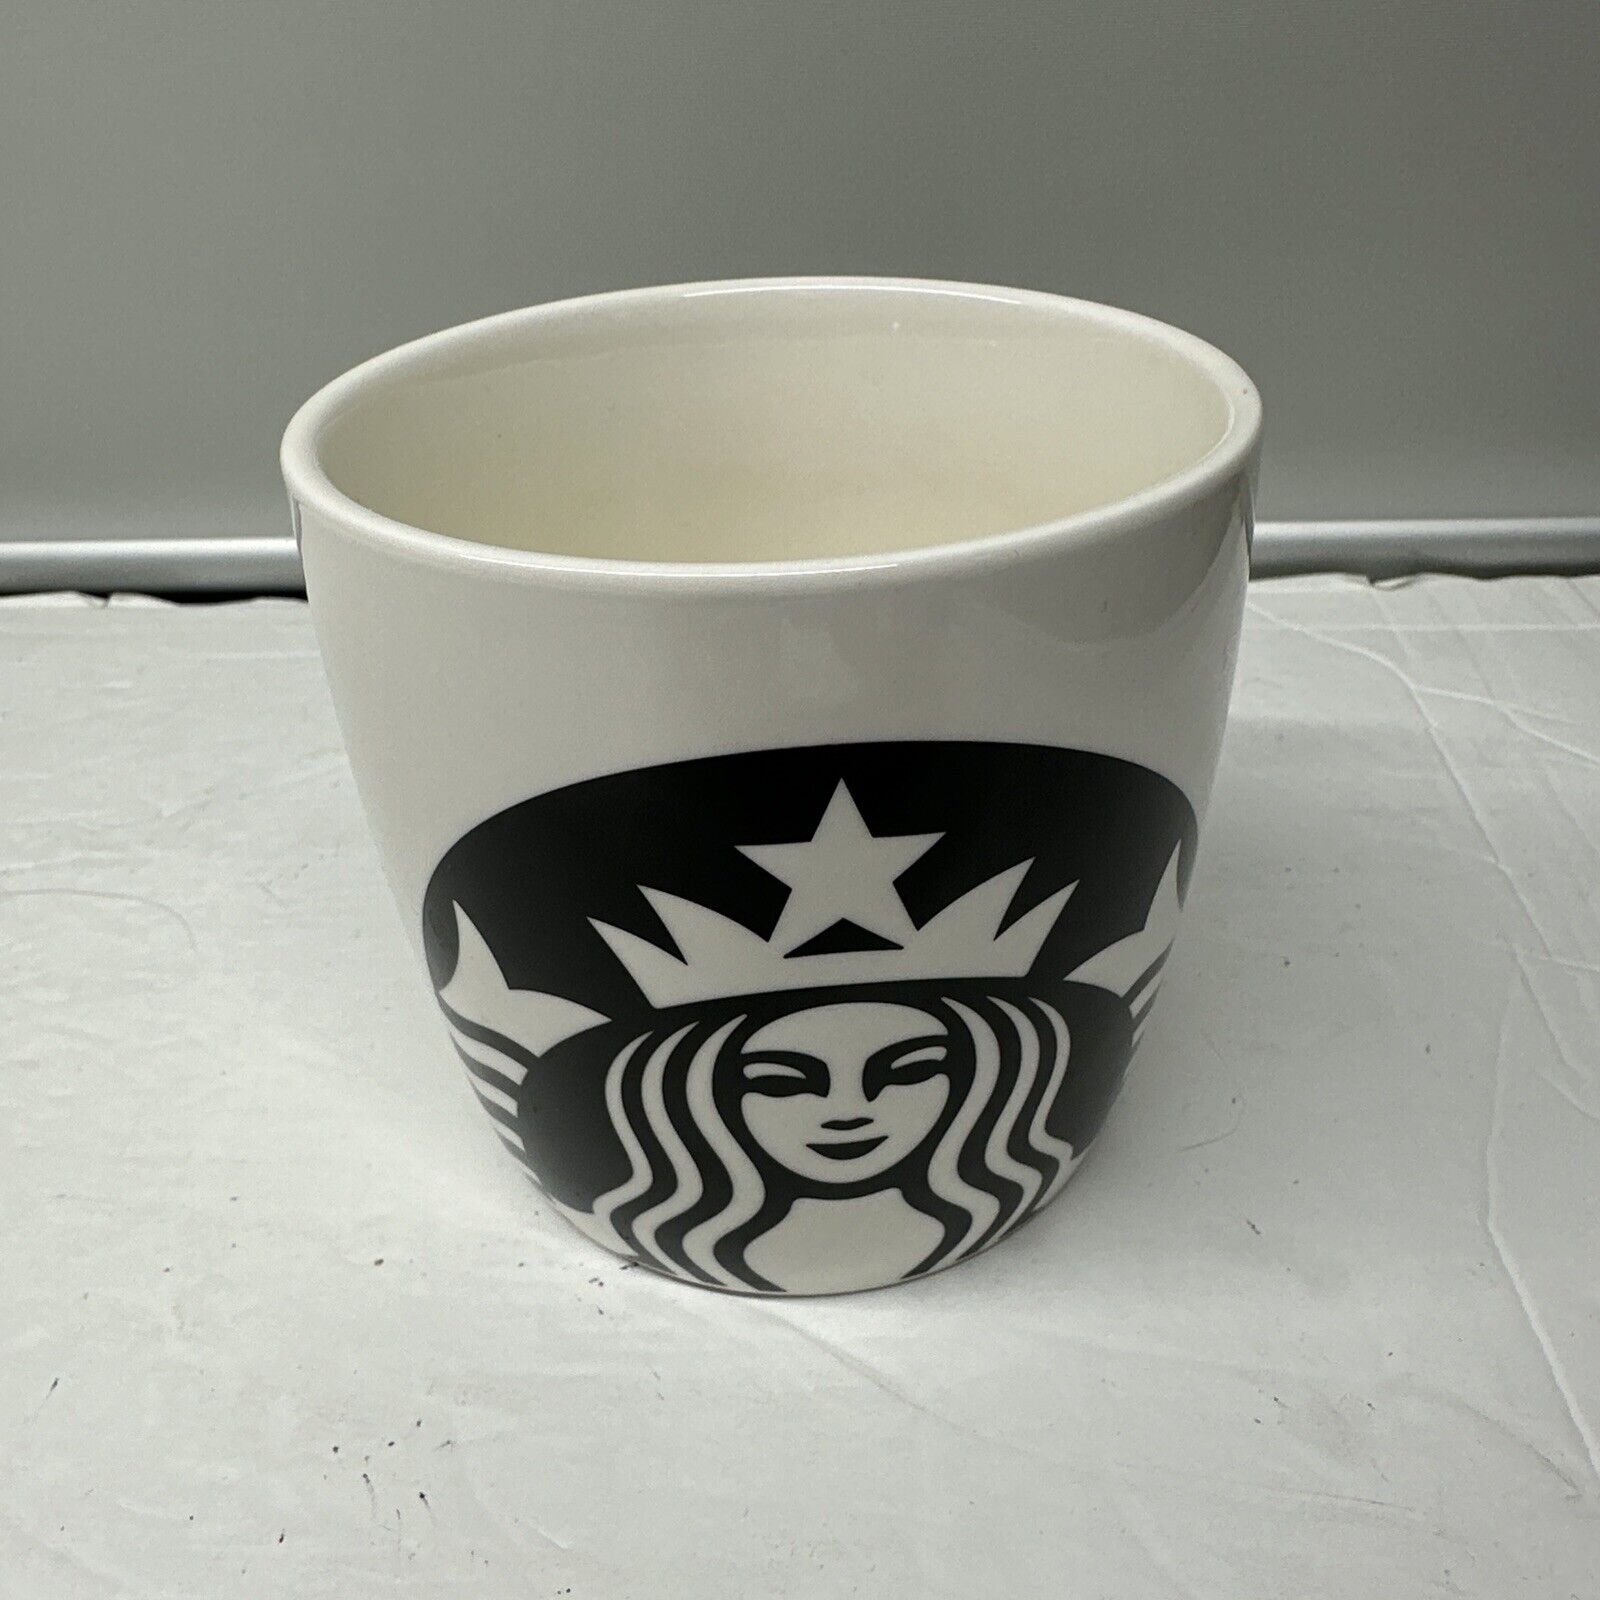 Starbucks Coffee Tea Cup Mug 2017 14 Oz  White and Black Mermaid Logo Siren